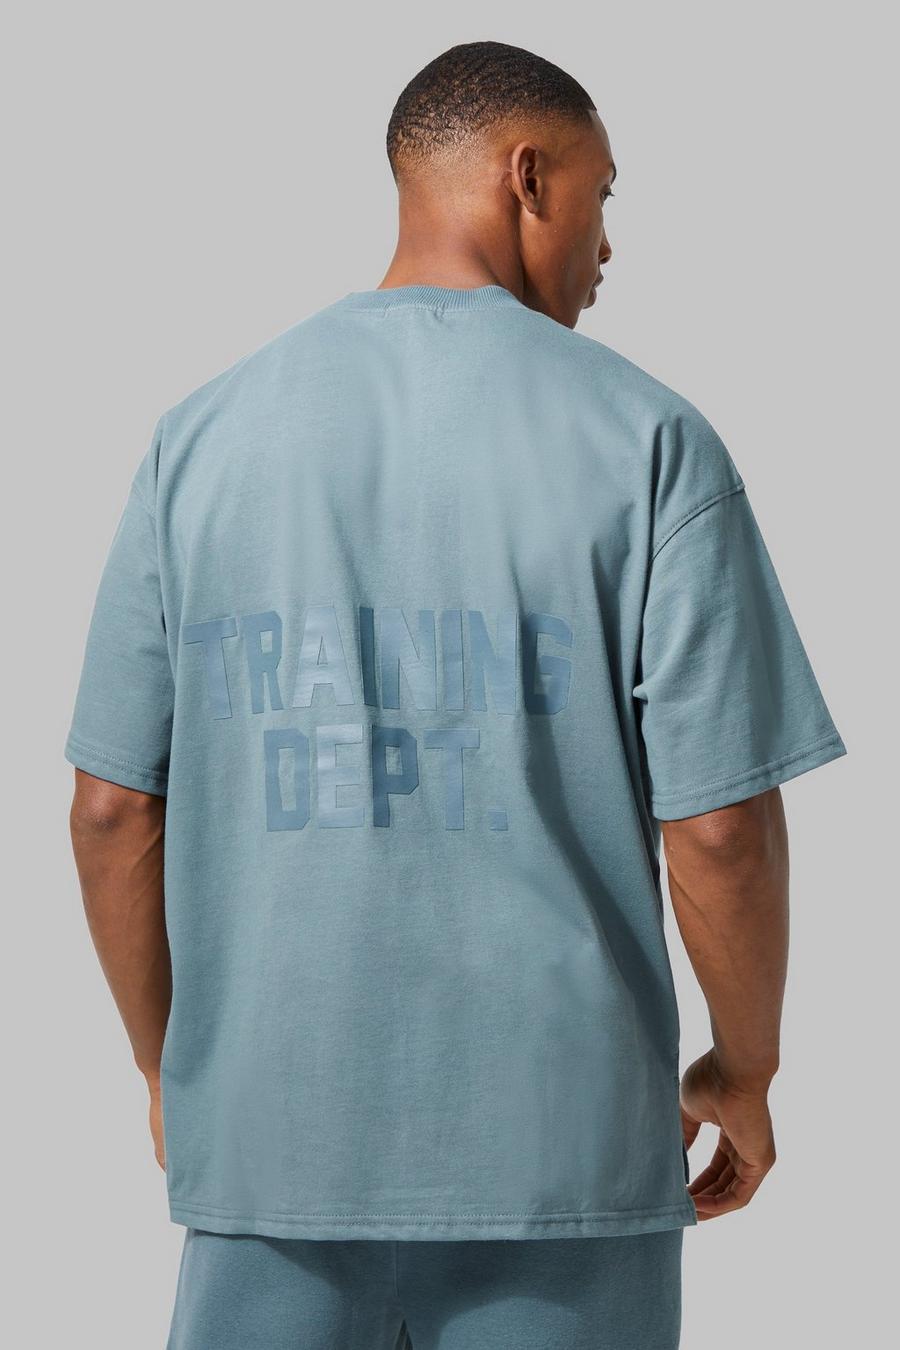 Slate blue Active Training Dept Oversized T-shirt image number 1